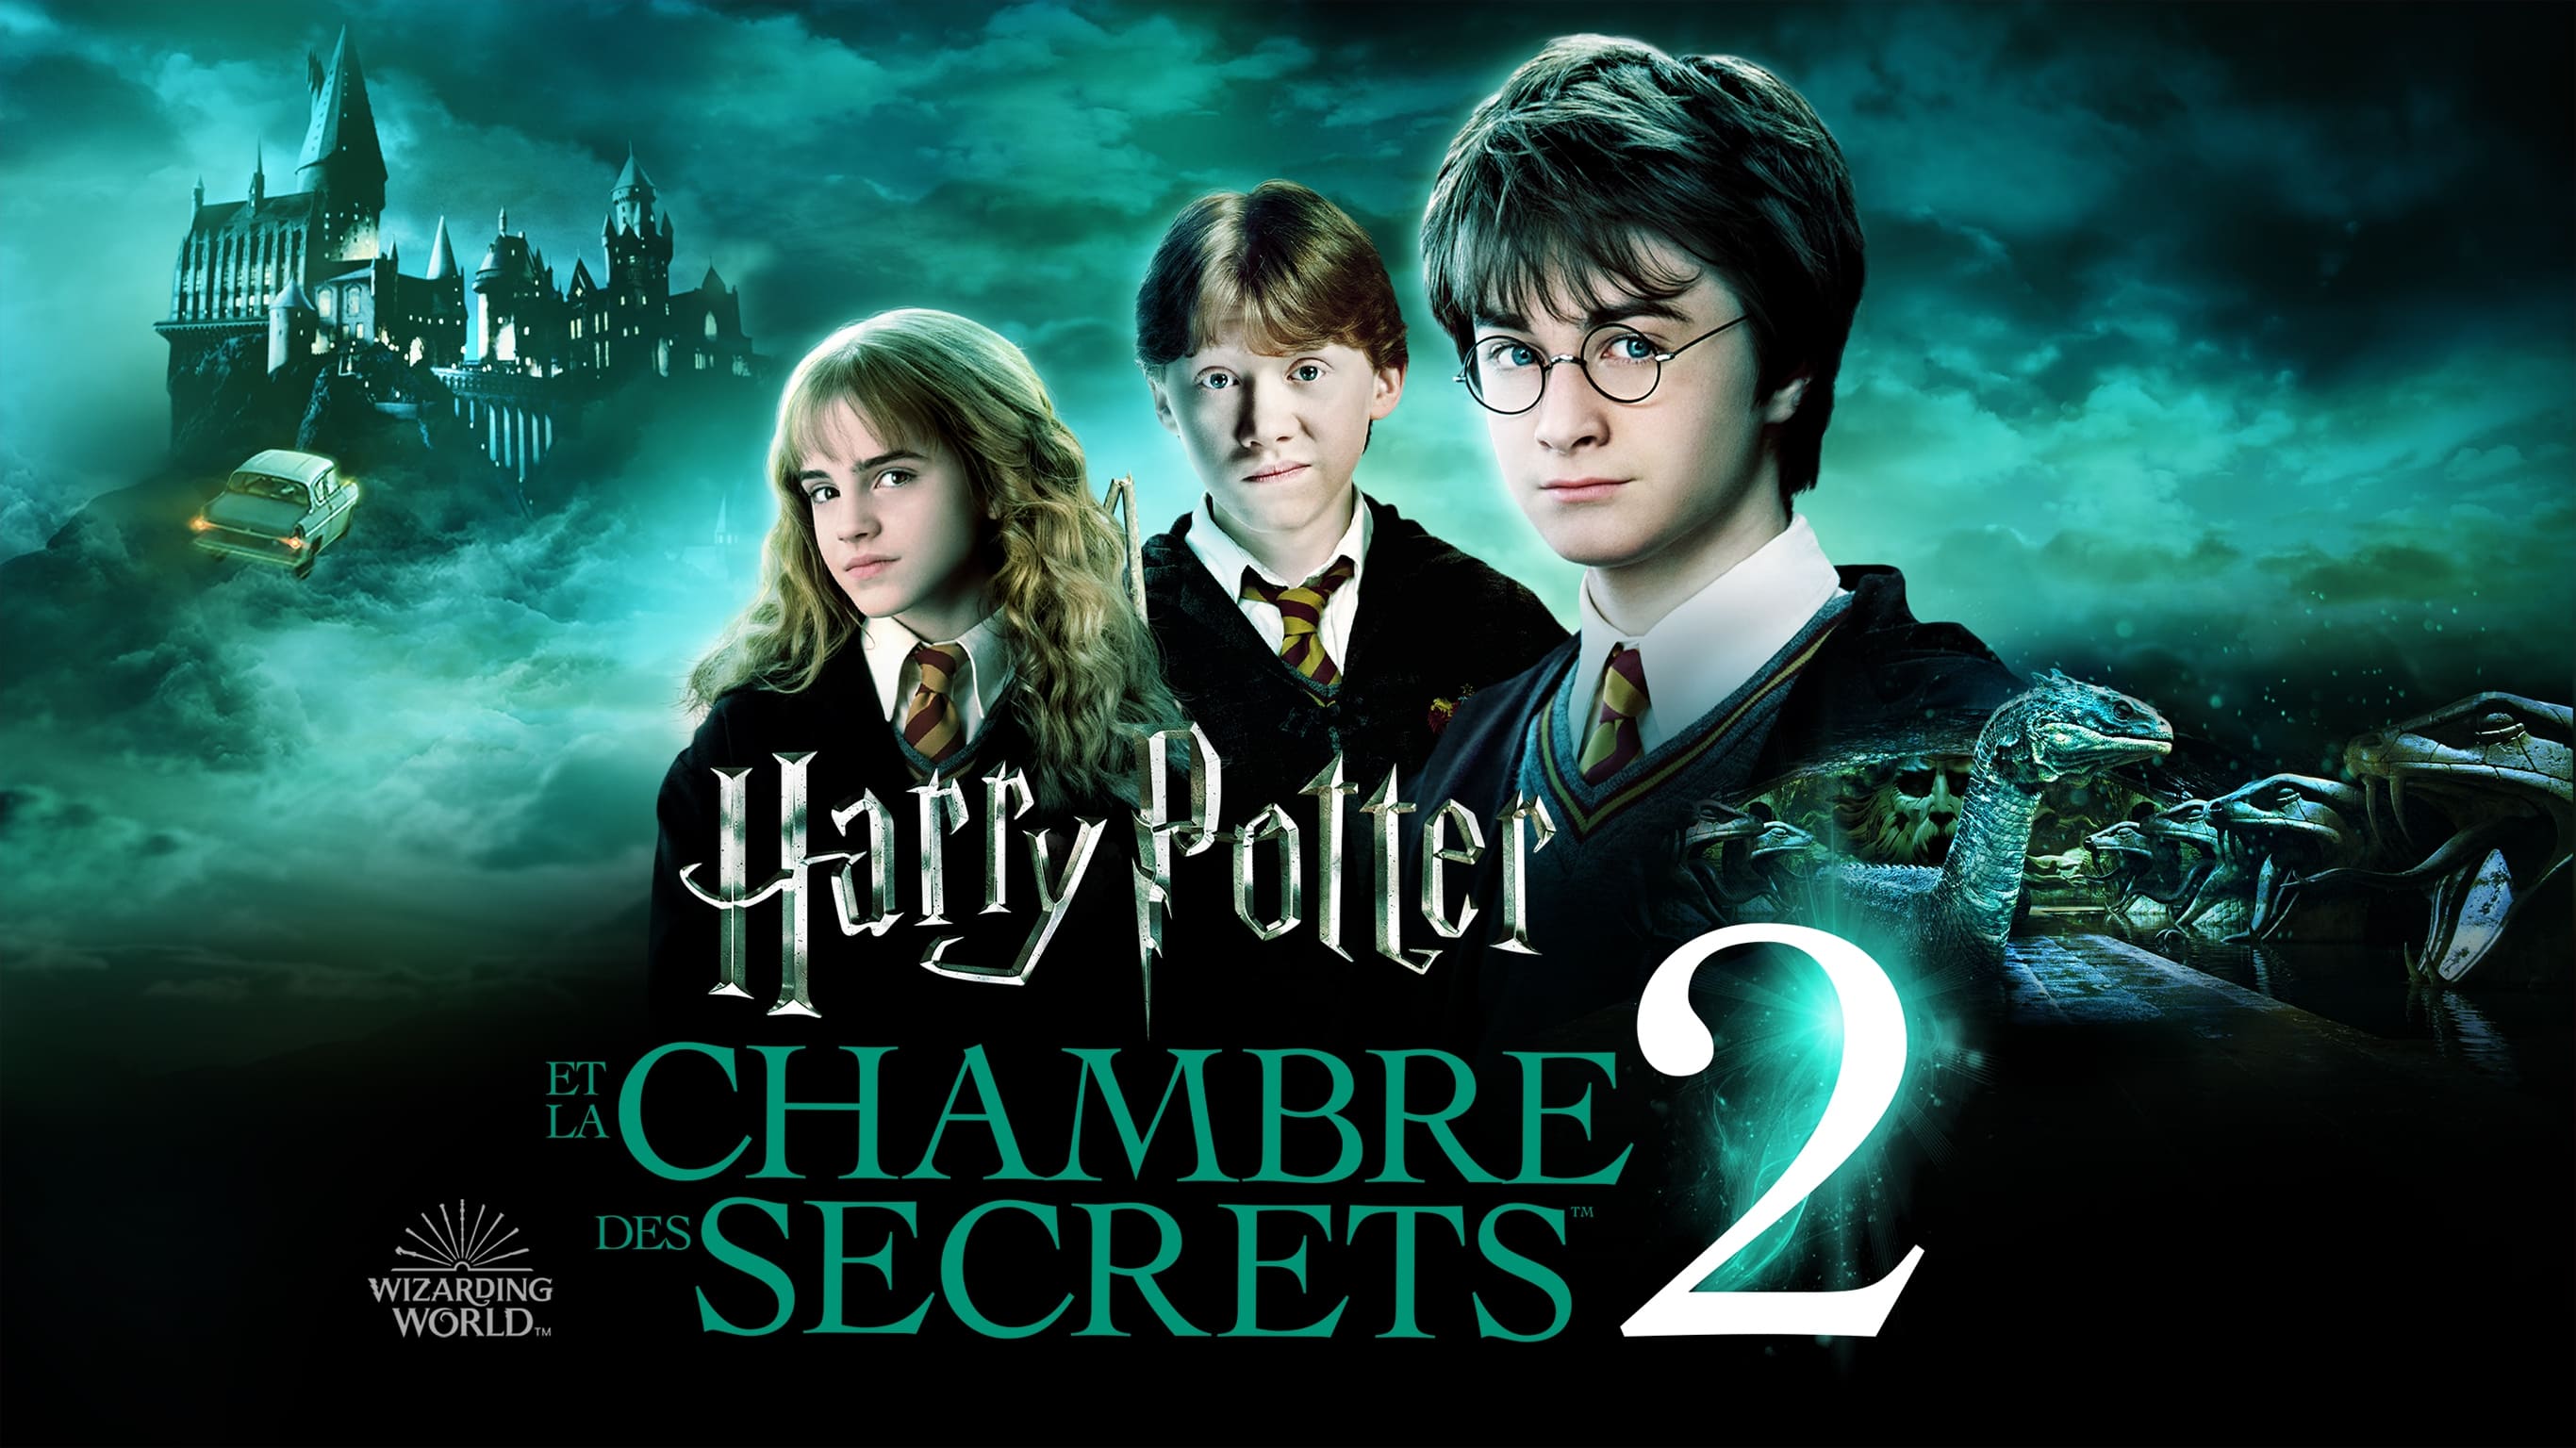 Image du film Harry Potter et la Chambre des secrets (version longue) hejxohp0ujy0lyrfuqvvkfgxravjpg